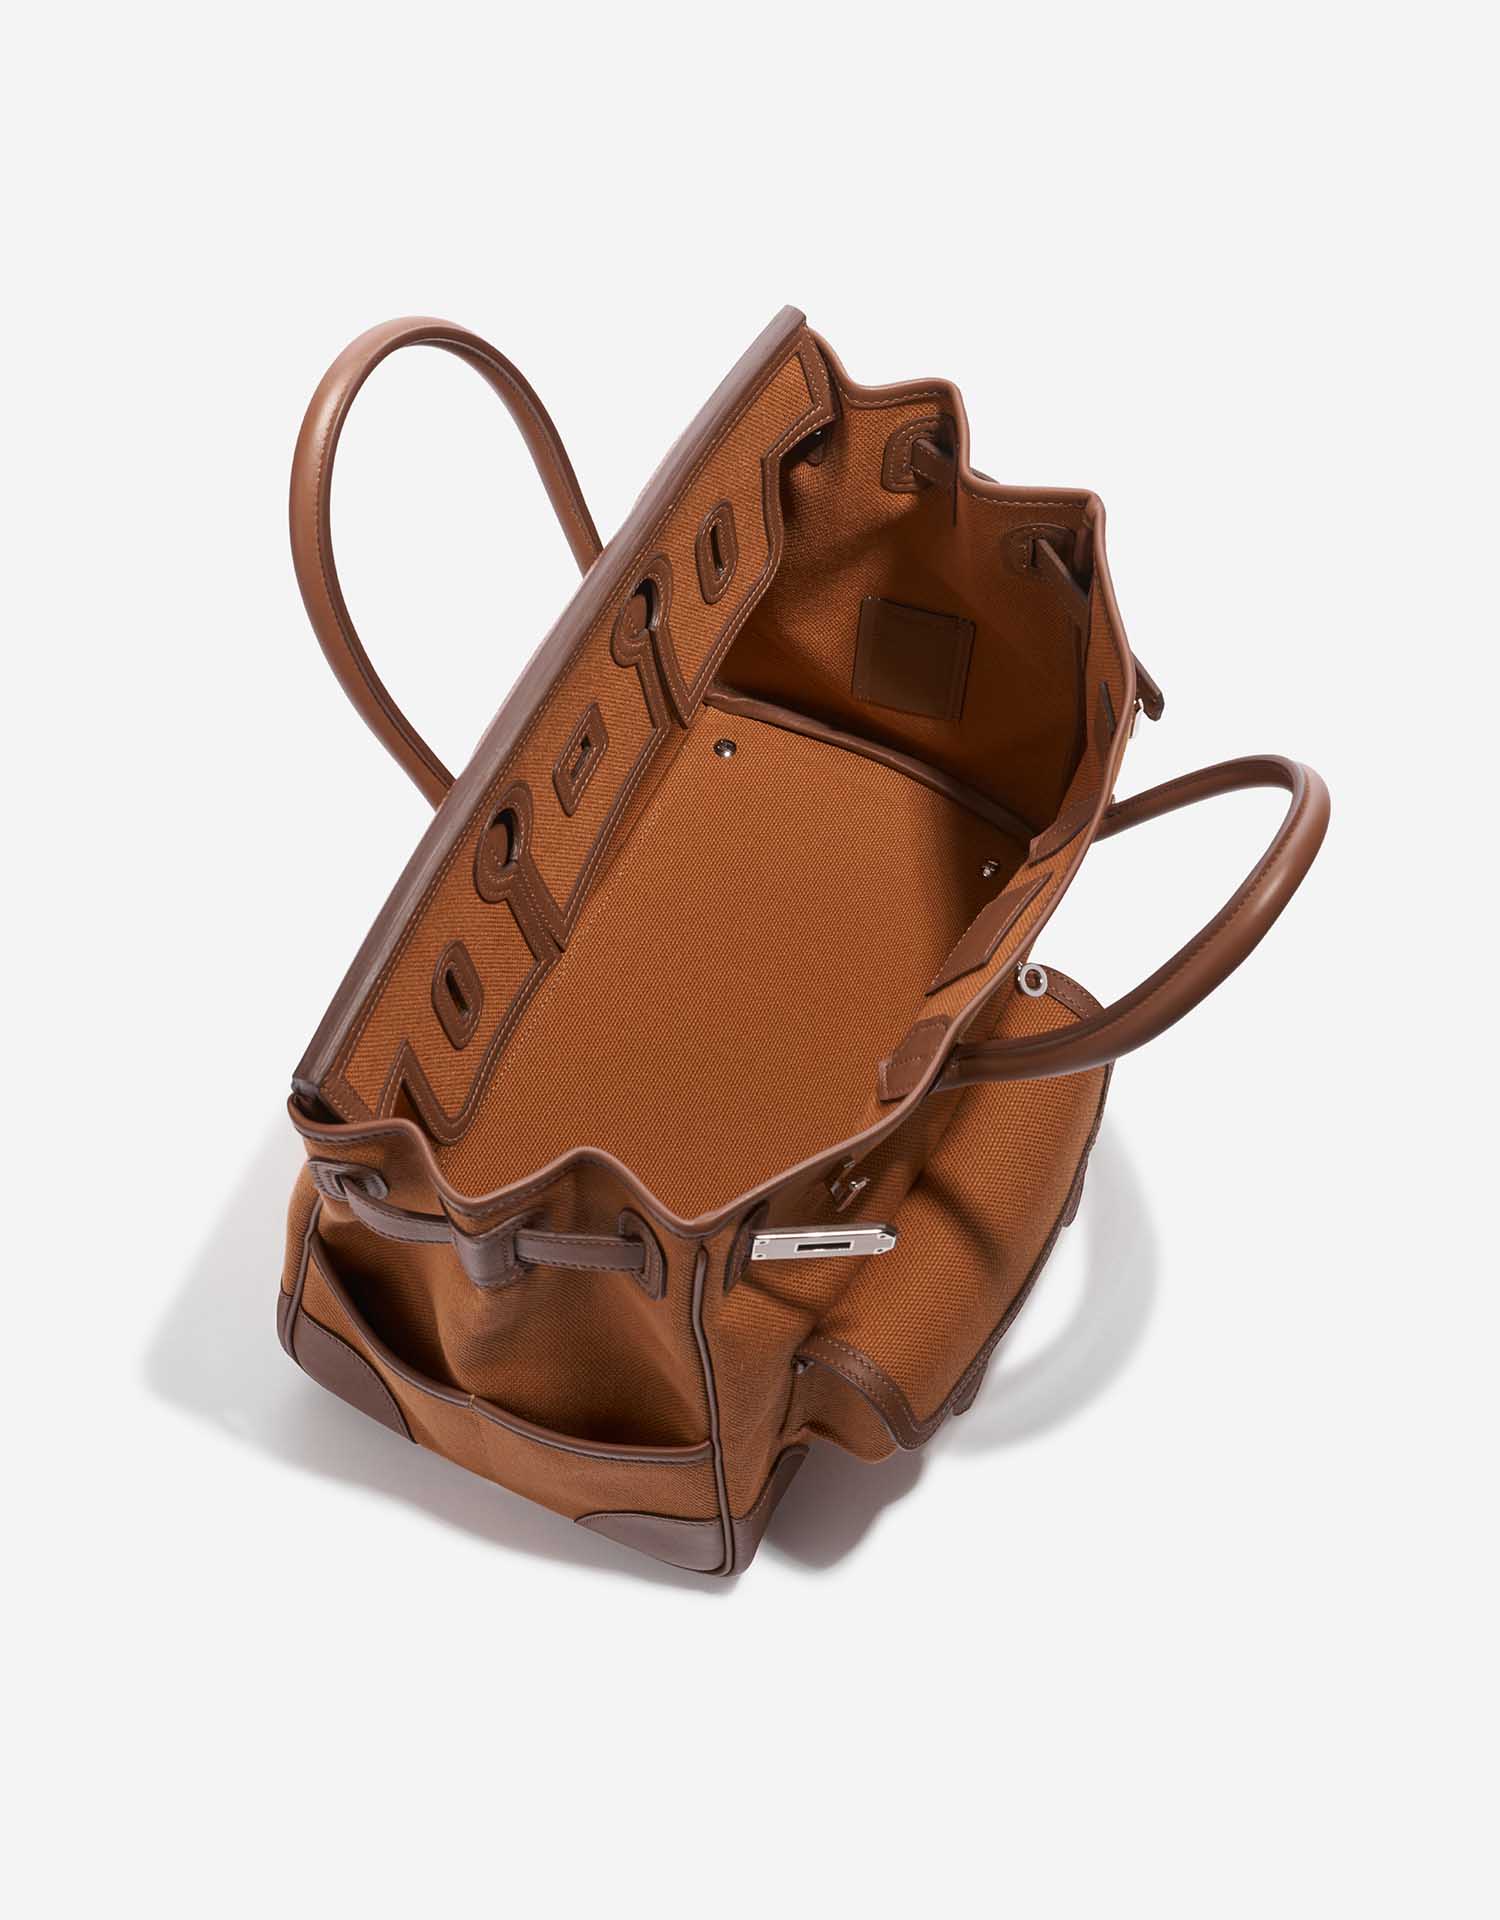 Pre-owned Hermès bag Birkin Cargo 35 Swift / Toile Goeland Marron / Gold Brown Inside | Sell your designer bag on Saclab.com